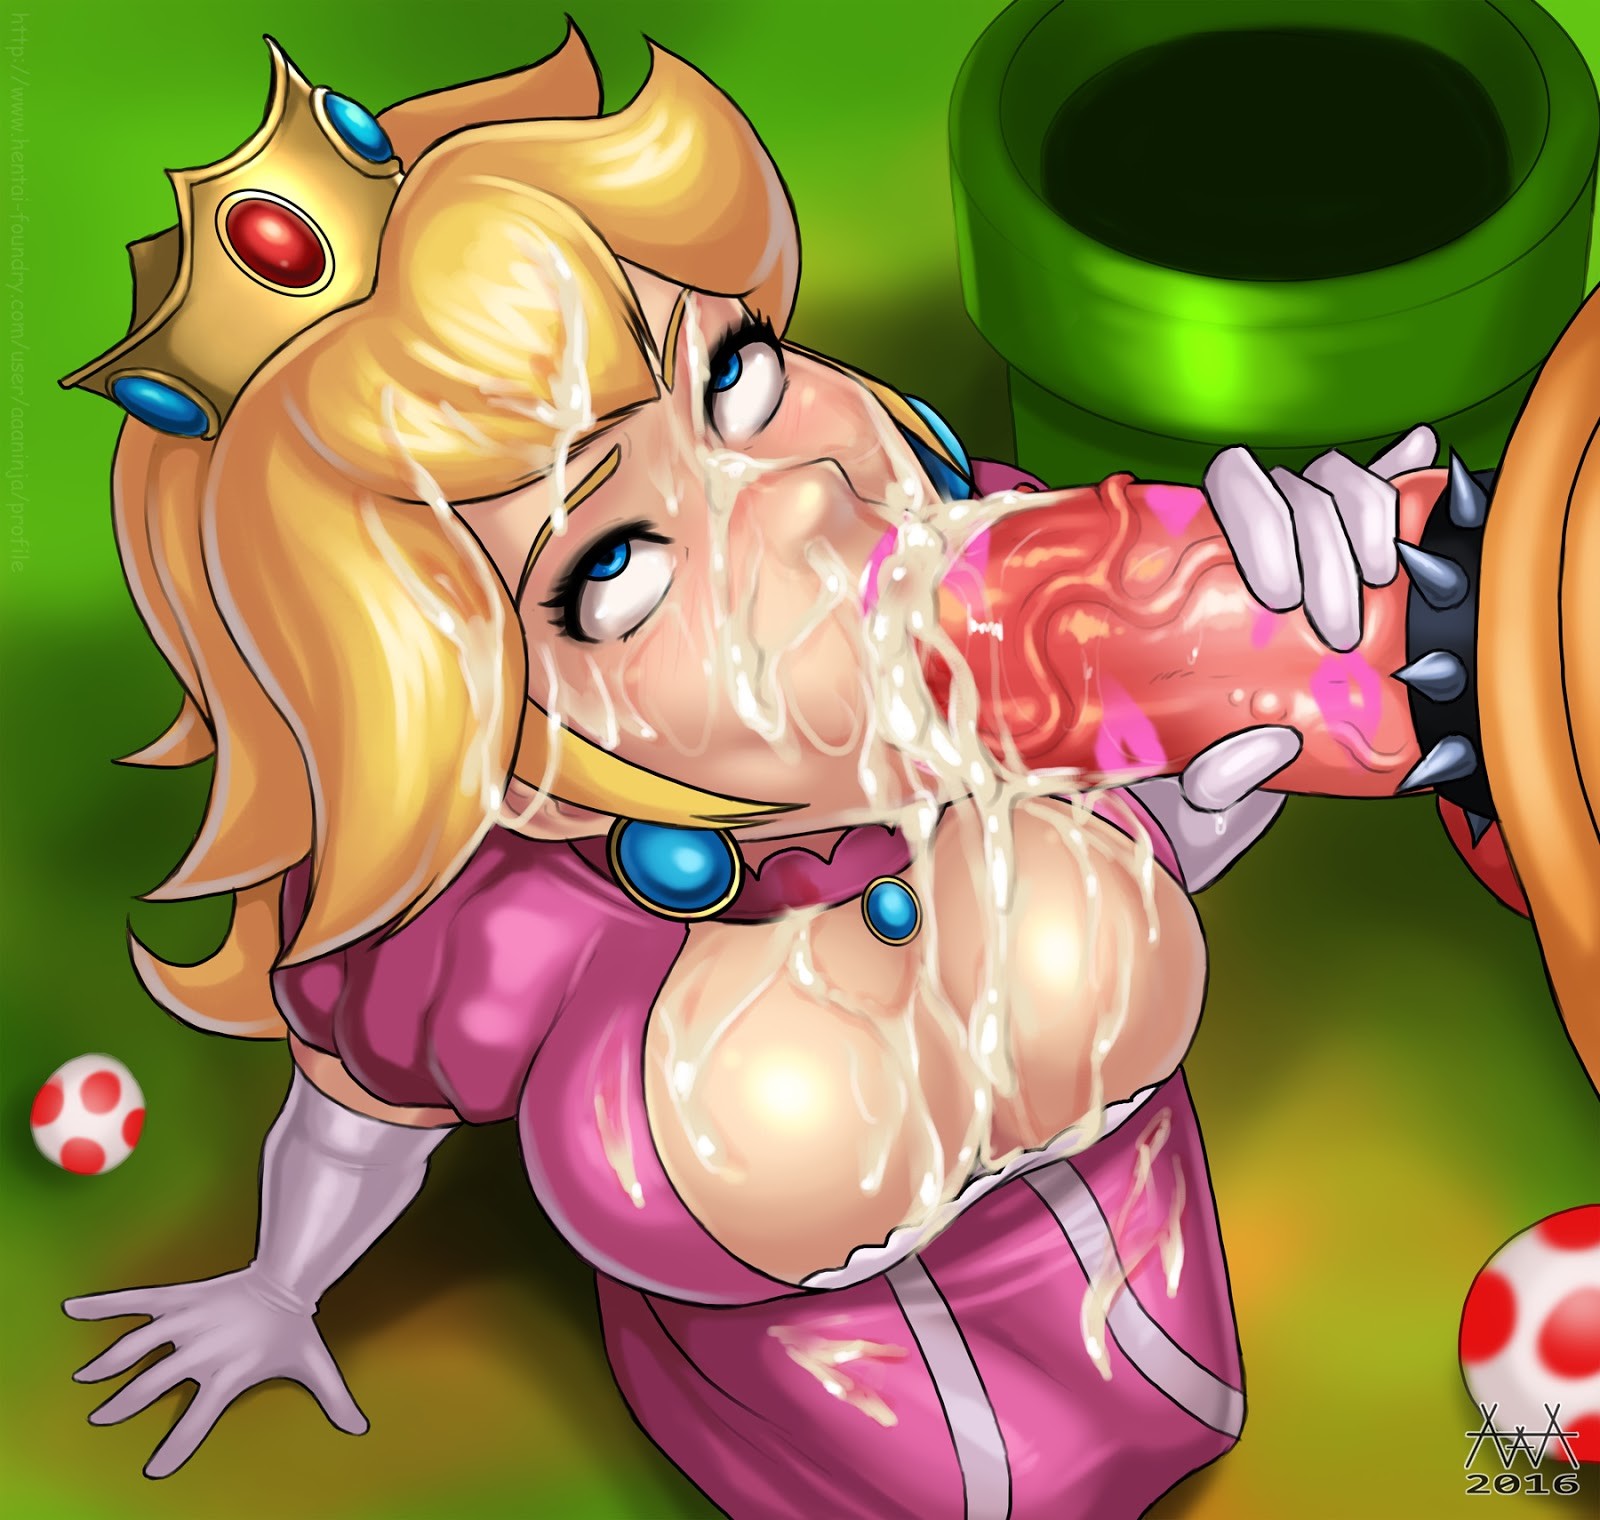 Princess Peach (Super Mario) #2.